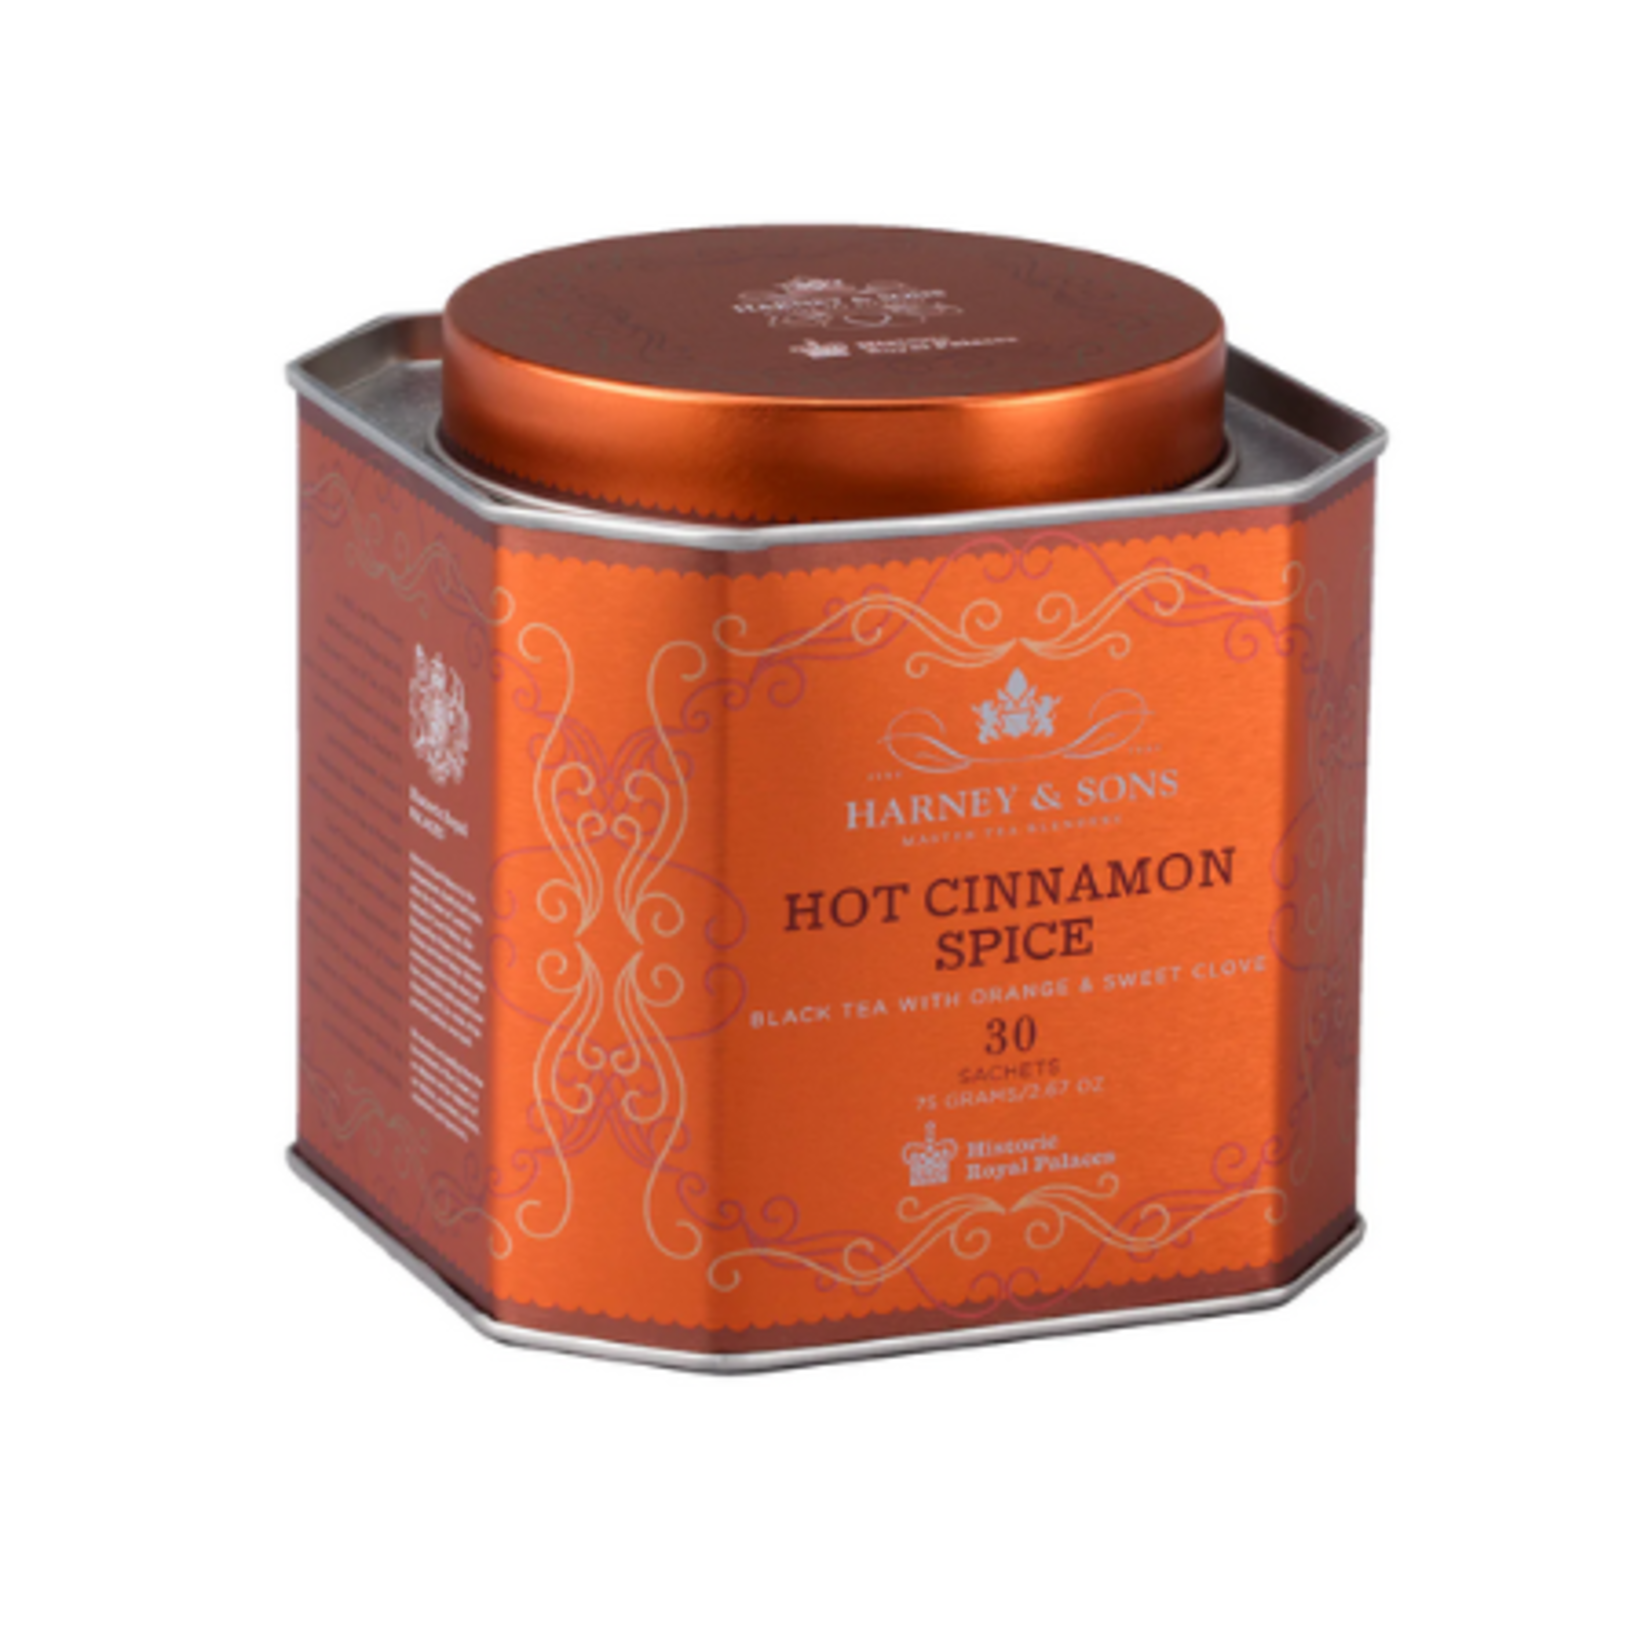 Harney & Sons Royal Palace Tin, Hot Cinnamon Spice